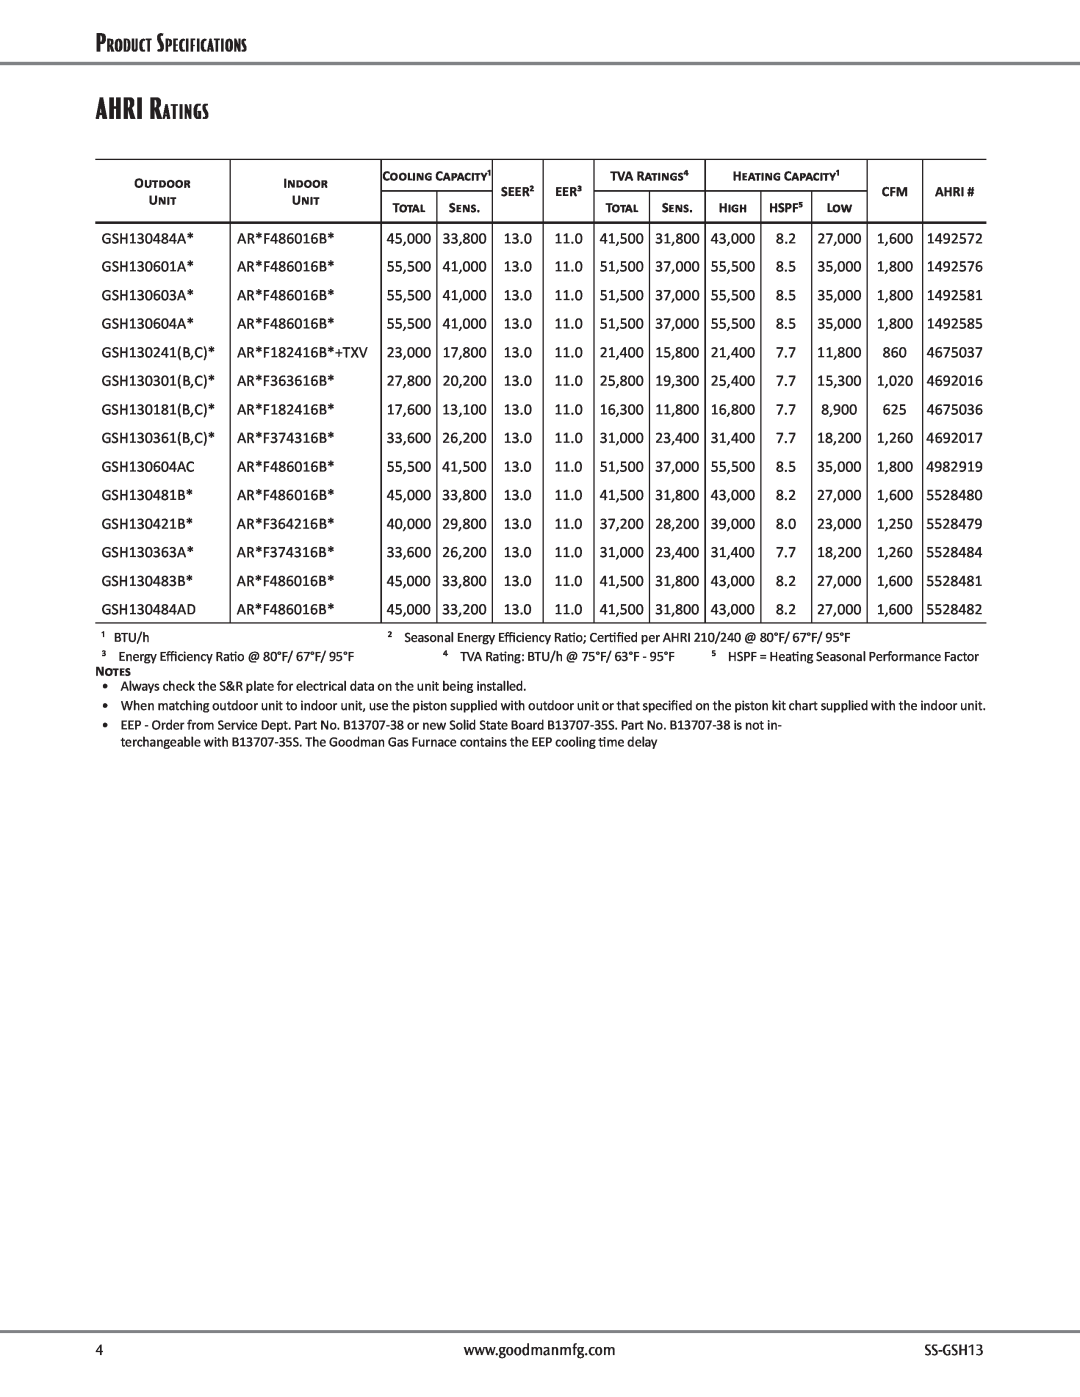 Goodman Mfg GSH13 warranty AHRI Ratings, Product Specifications 